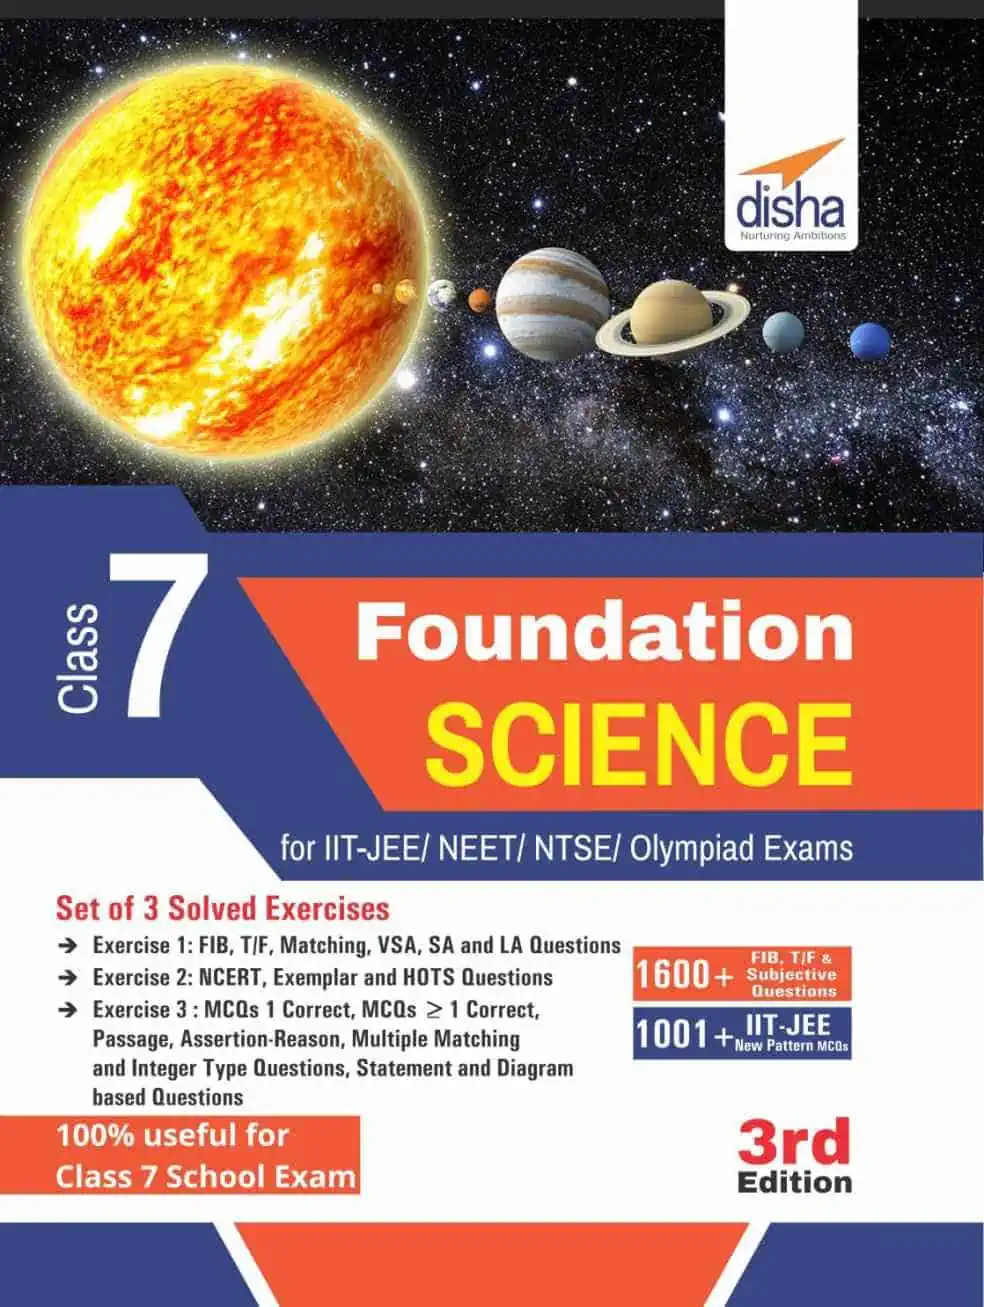 Foundation Science for CLass 7 - Disha Pdf